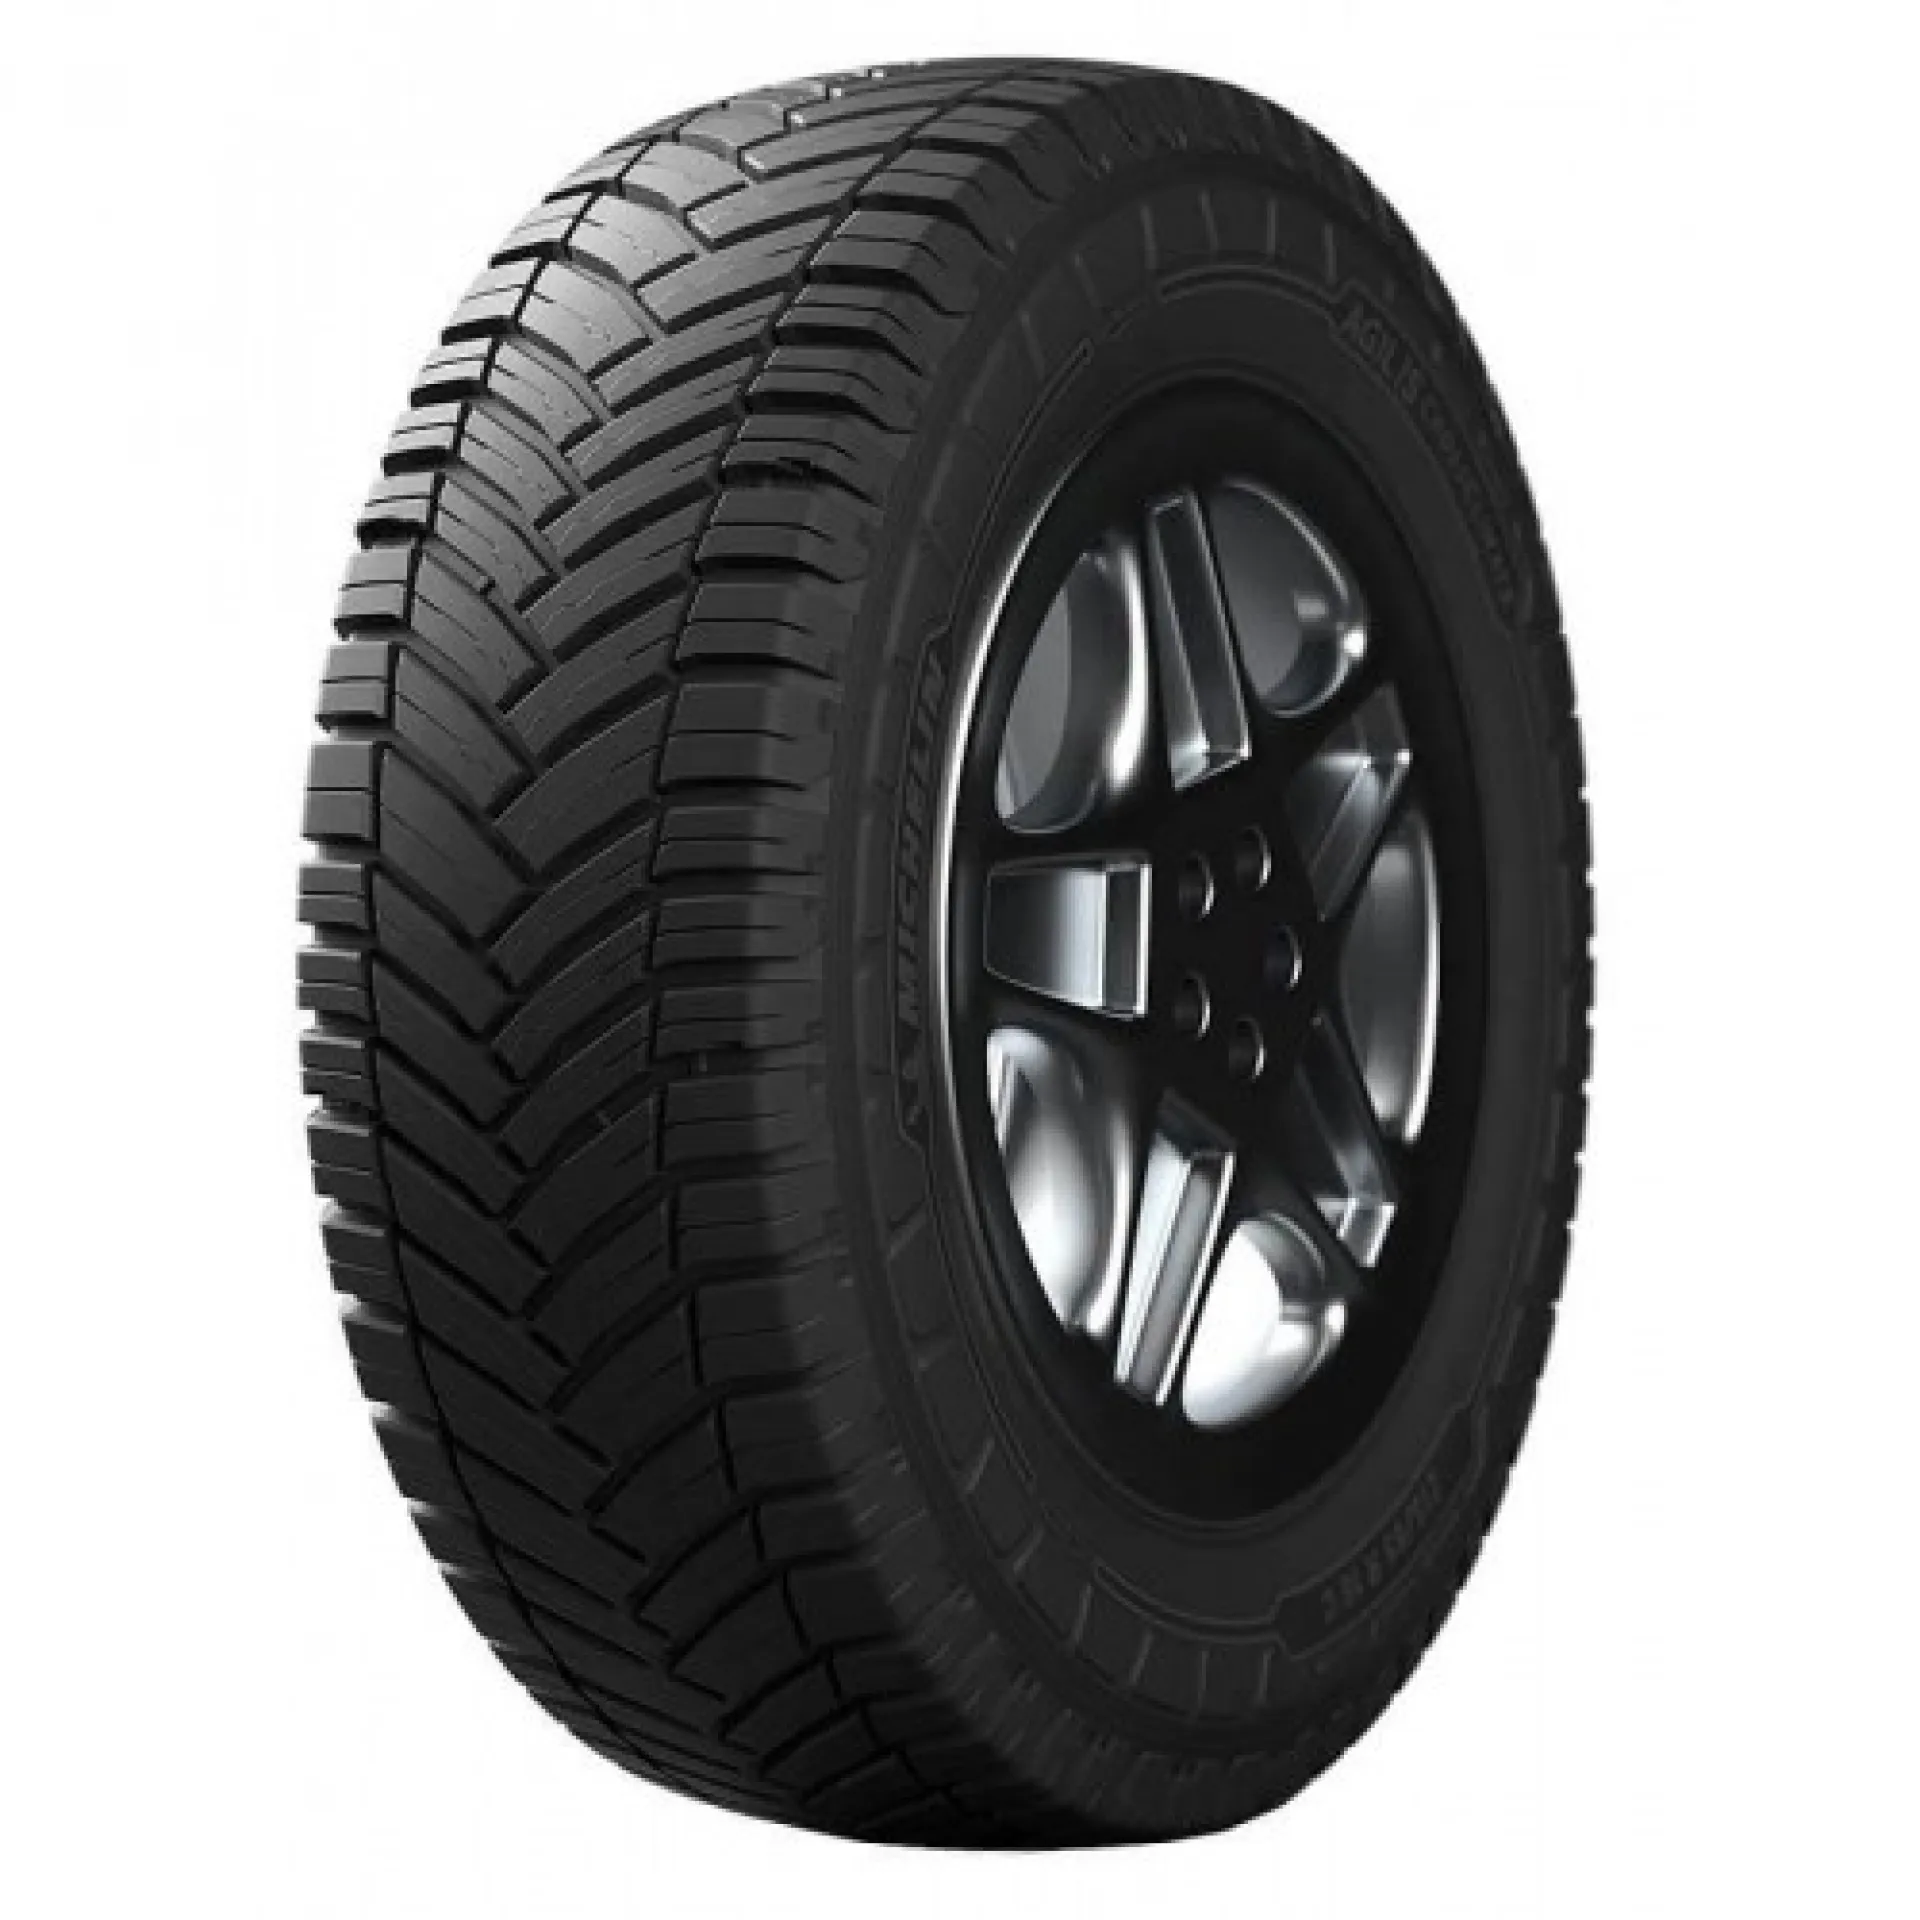 Prematuur Negen Spanning Michelin Agilis CrossClimate - Tire Reviews and Tests